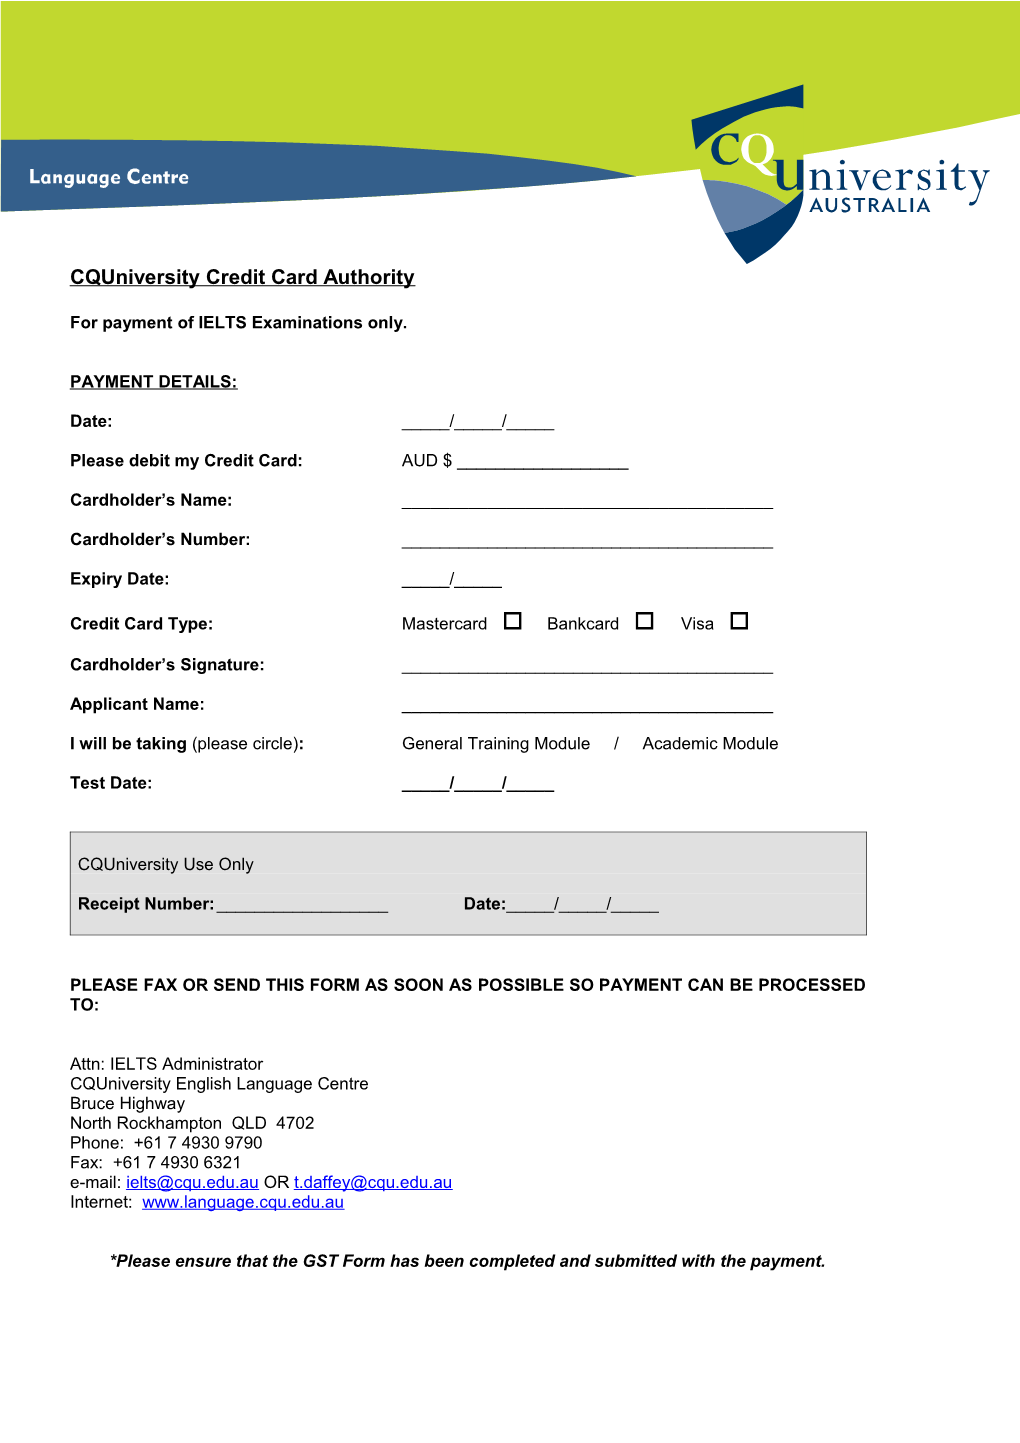 CQU Credit Card Authority